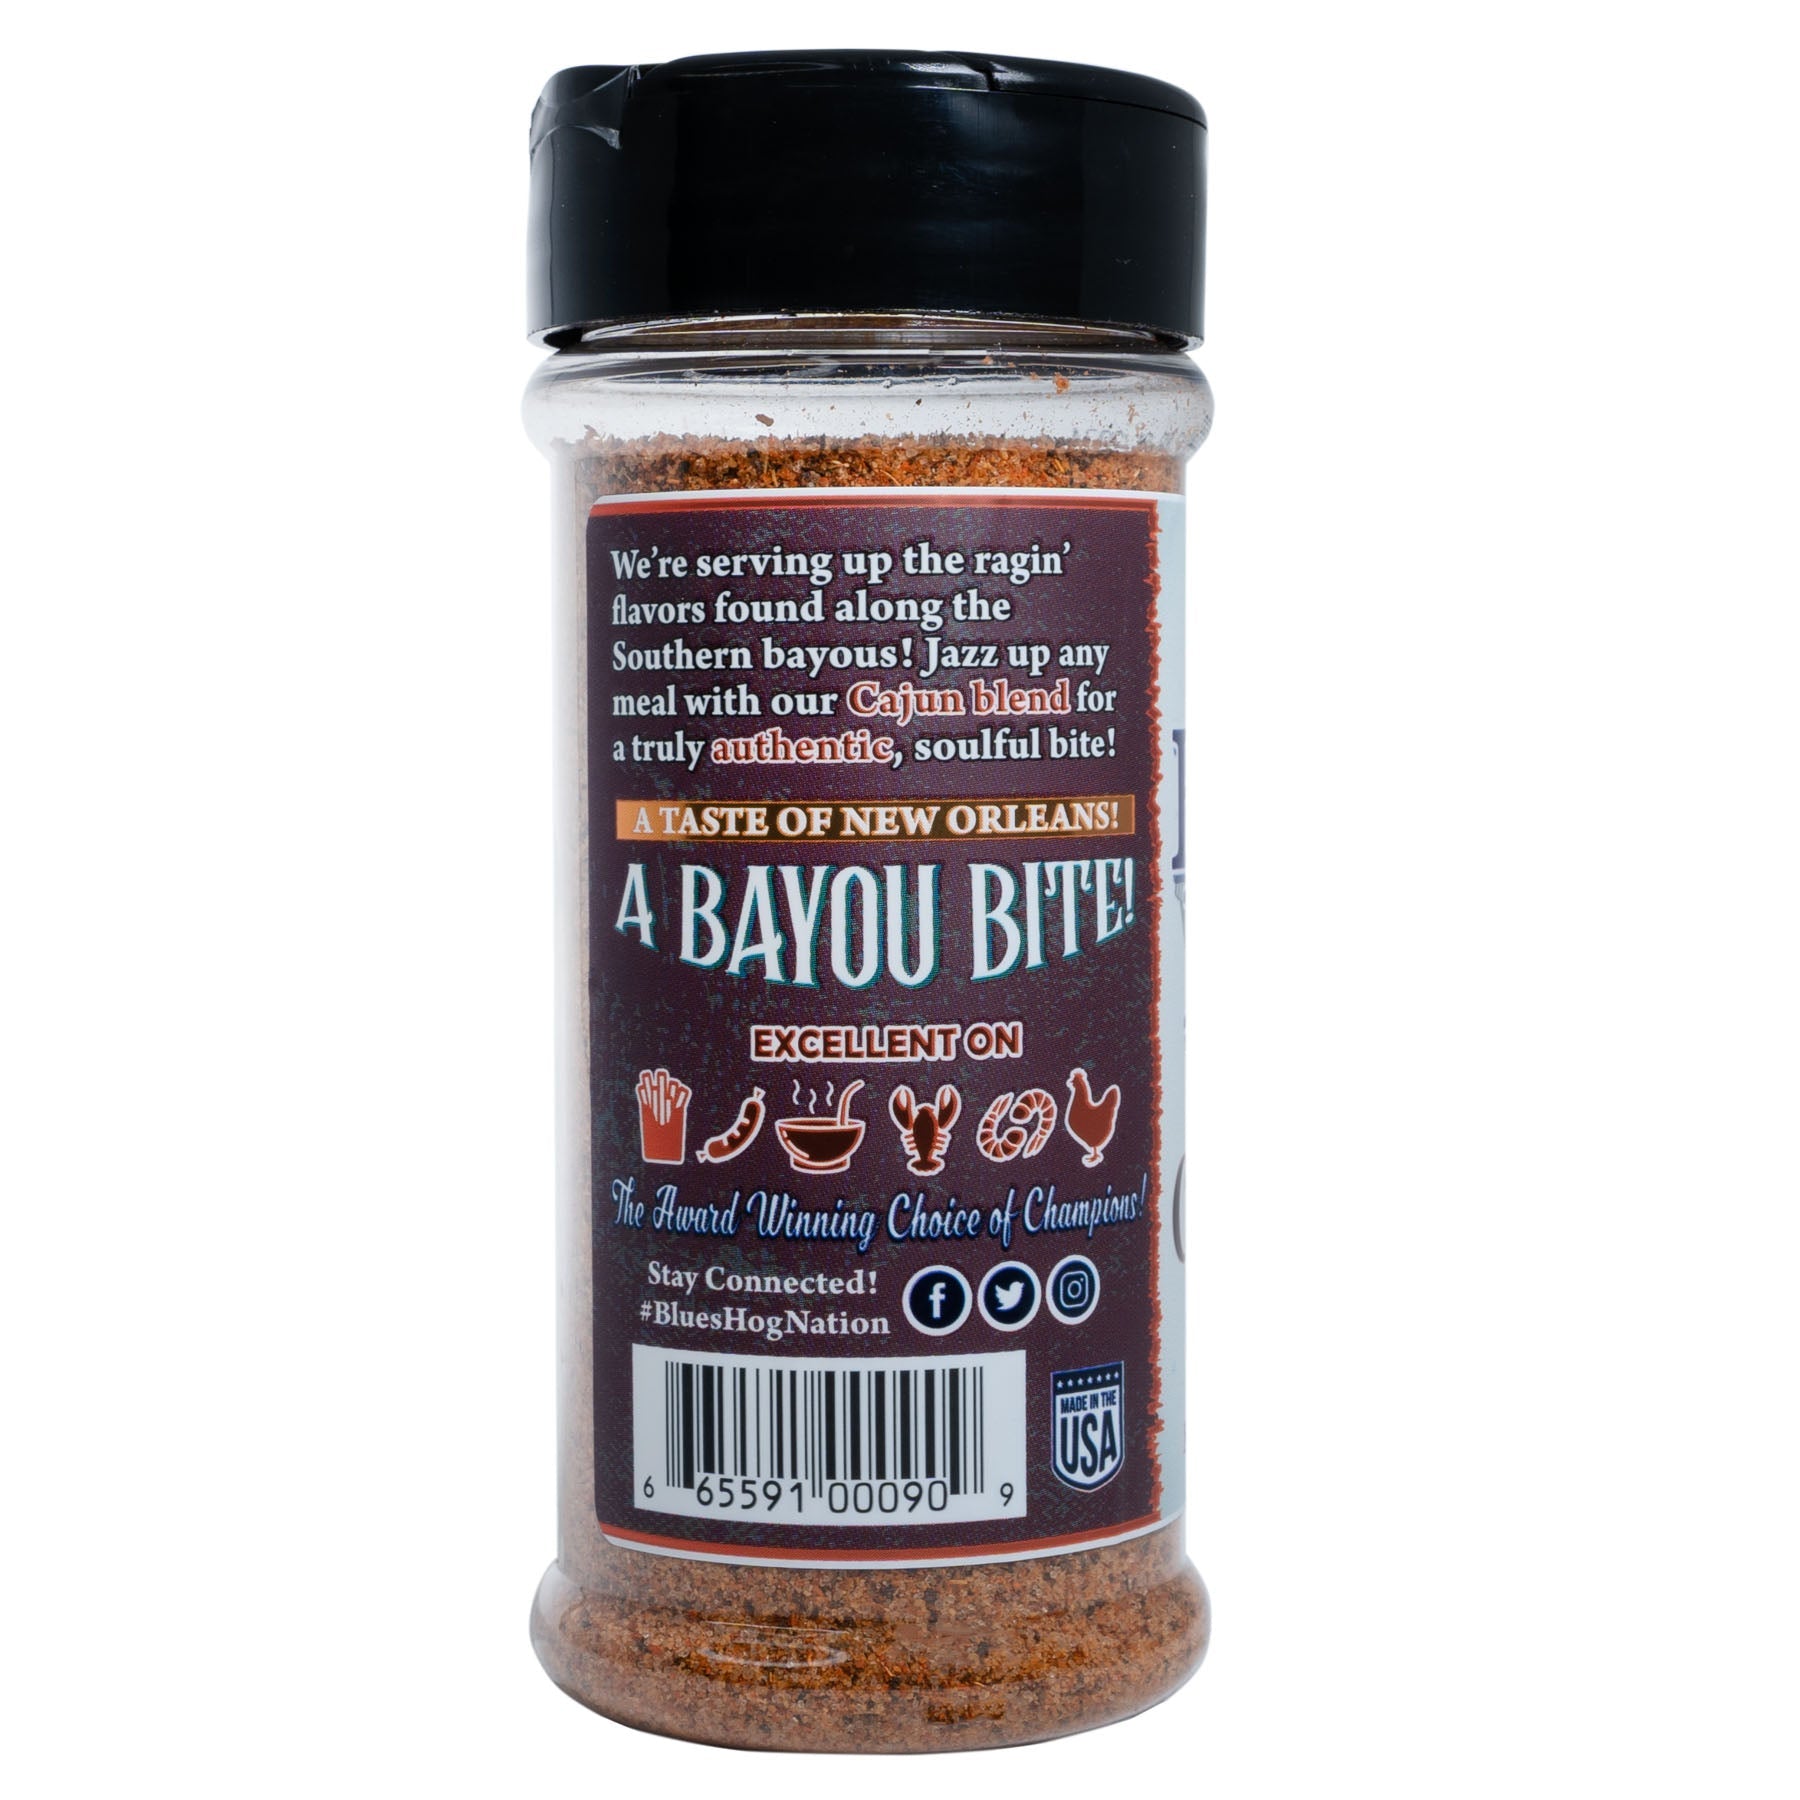 Cajun Bayou Seasoning